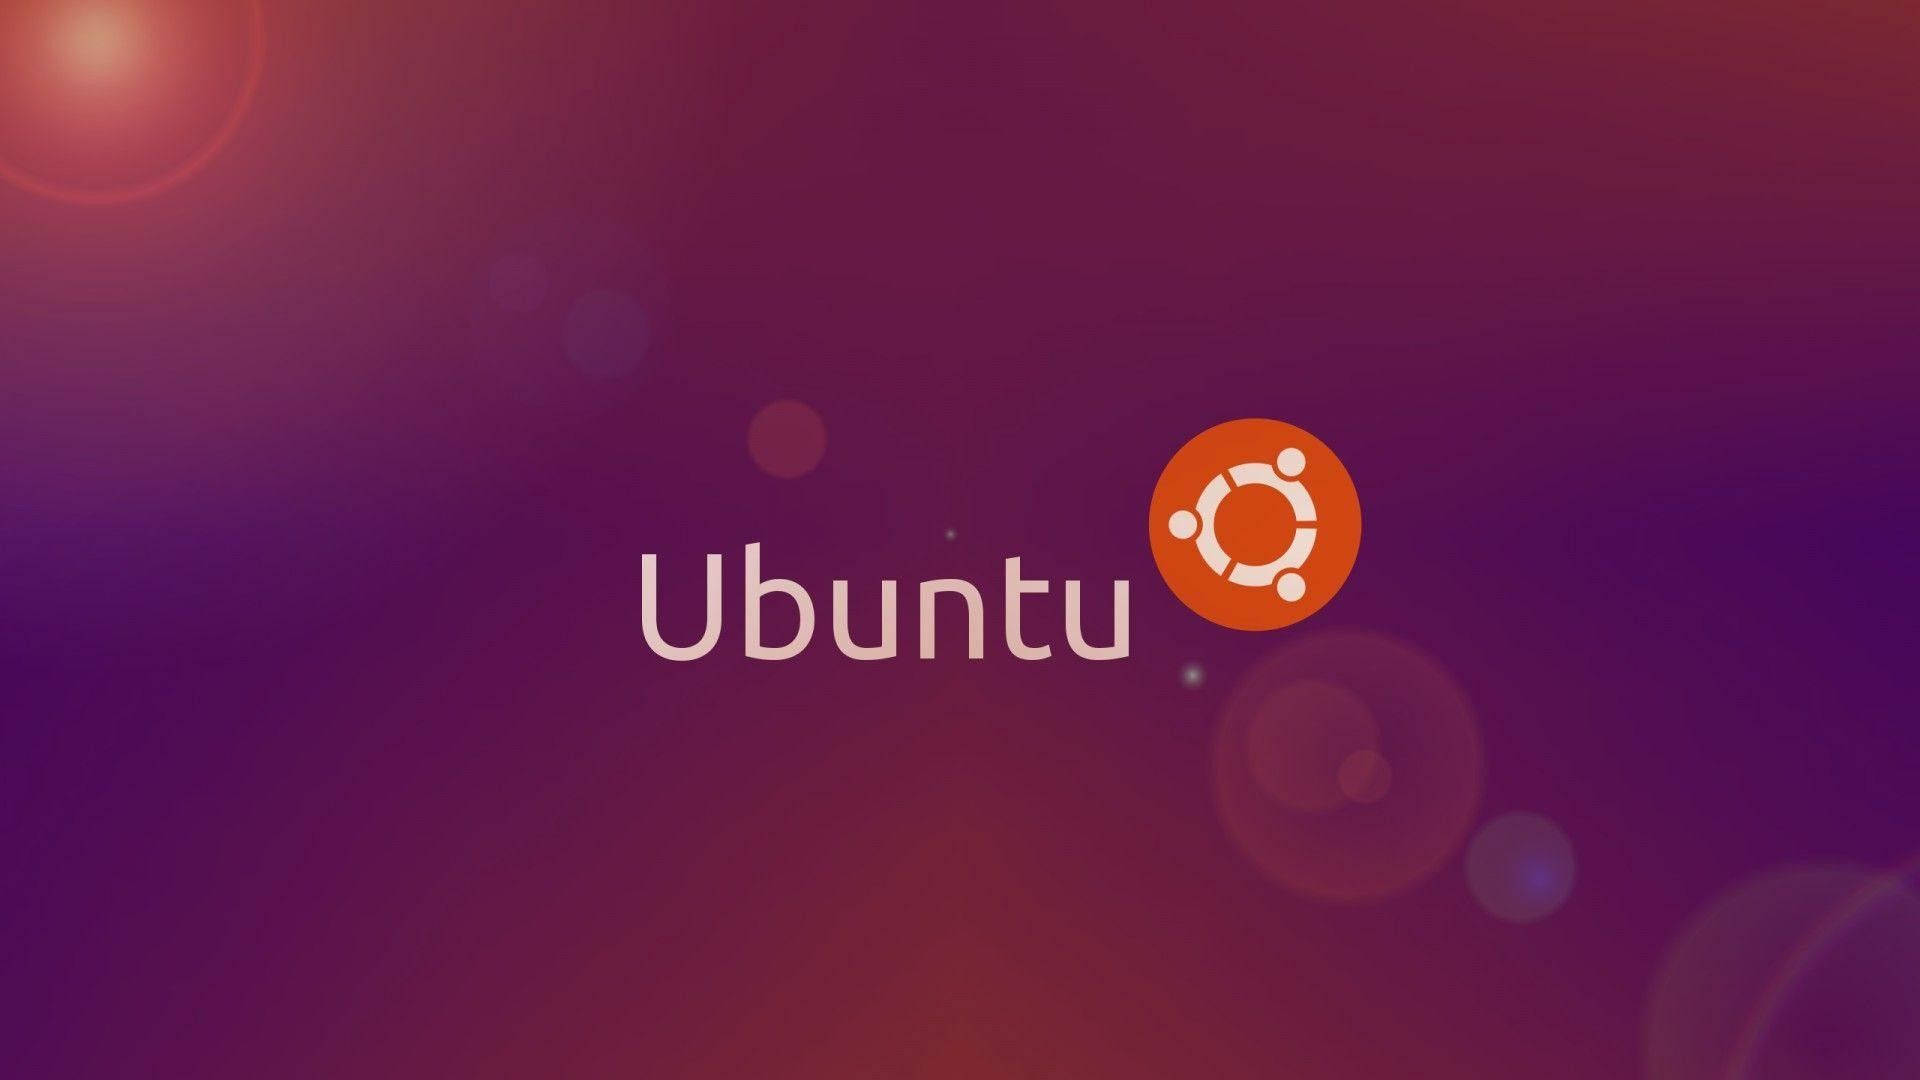 Aggregieren Mehr Als Ber Hintergrund Ubuntu Neueste Dedaotaonec